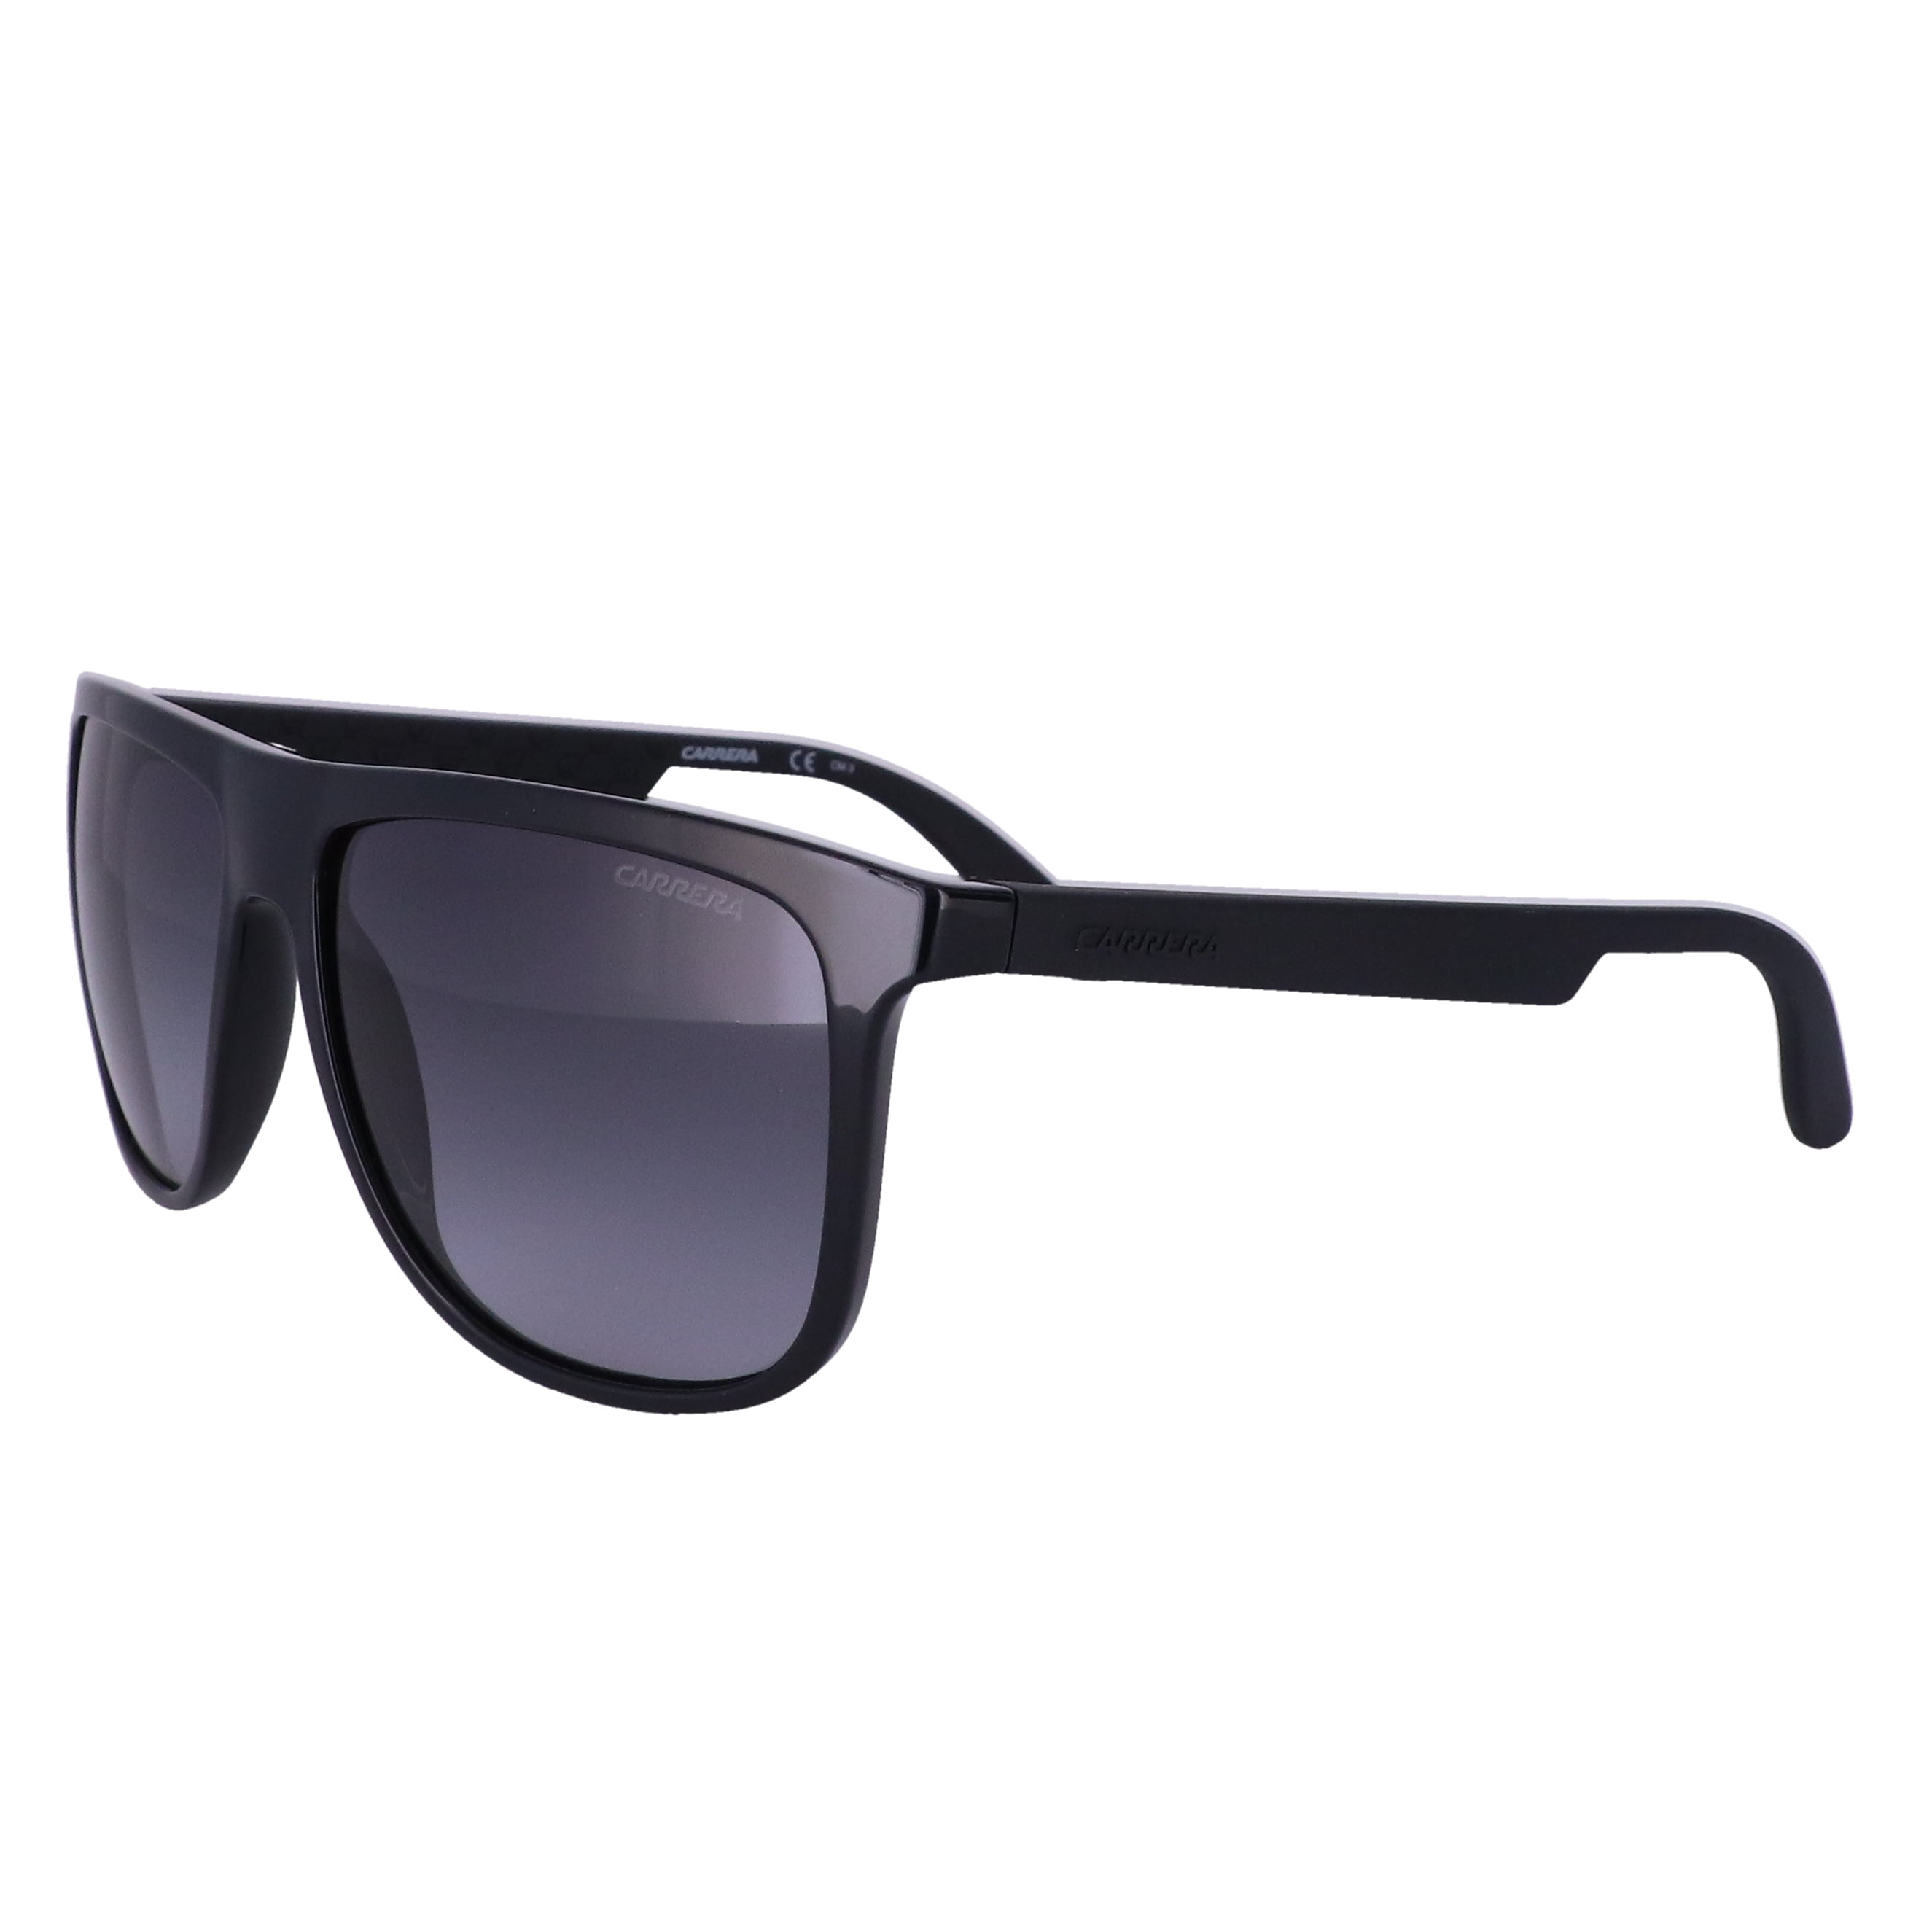 CARRERA Sunglasses 5003 BIL Shiny Black Unisex 58x16x140 